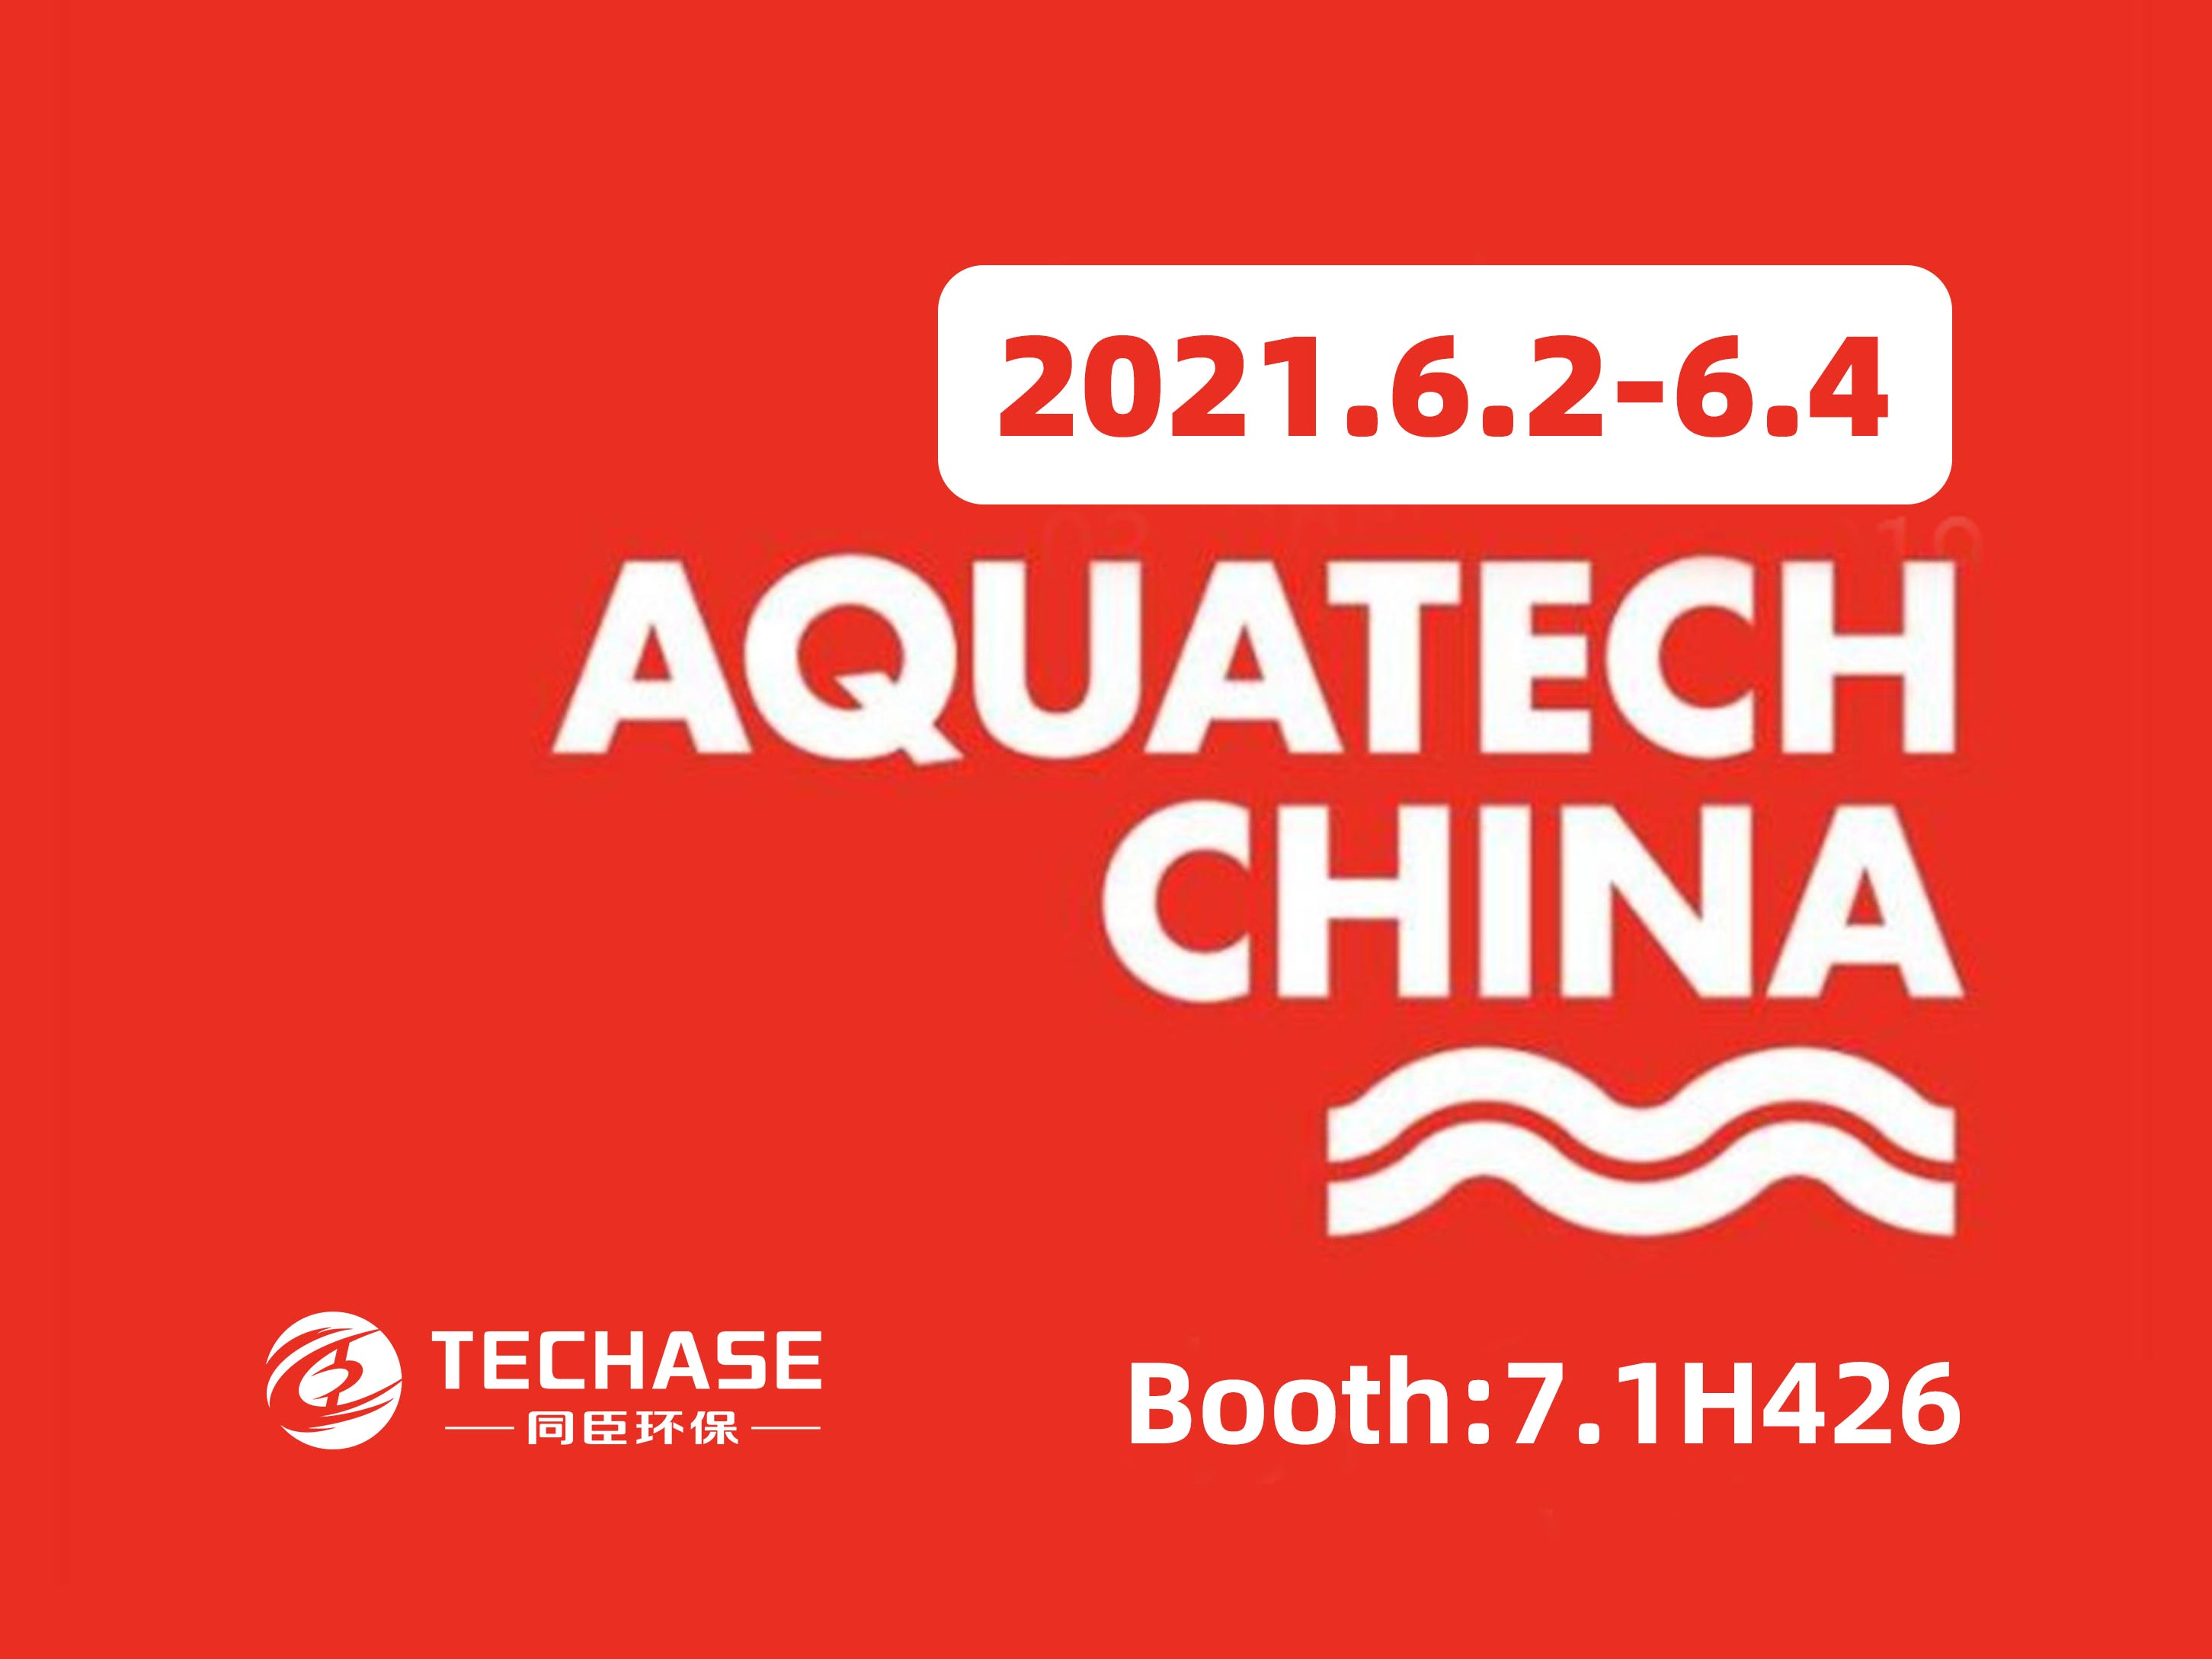 Techase Exhibition Forecast | Aquatech China 2021